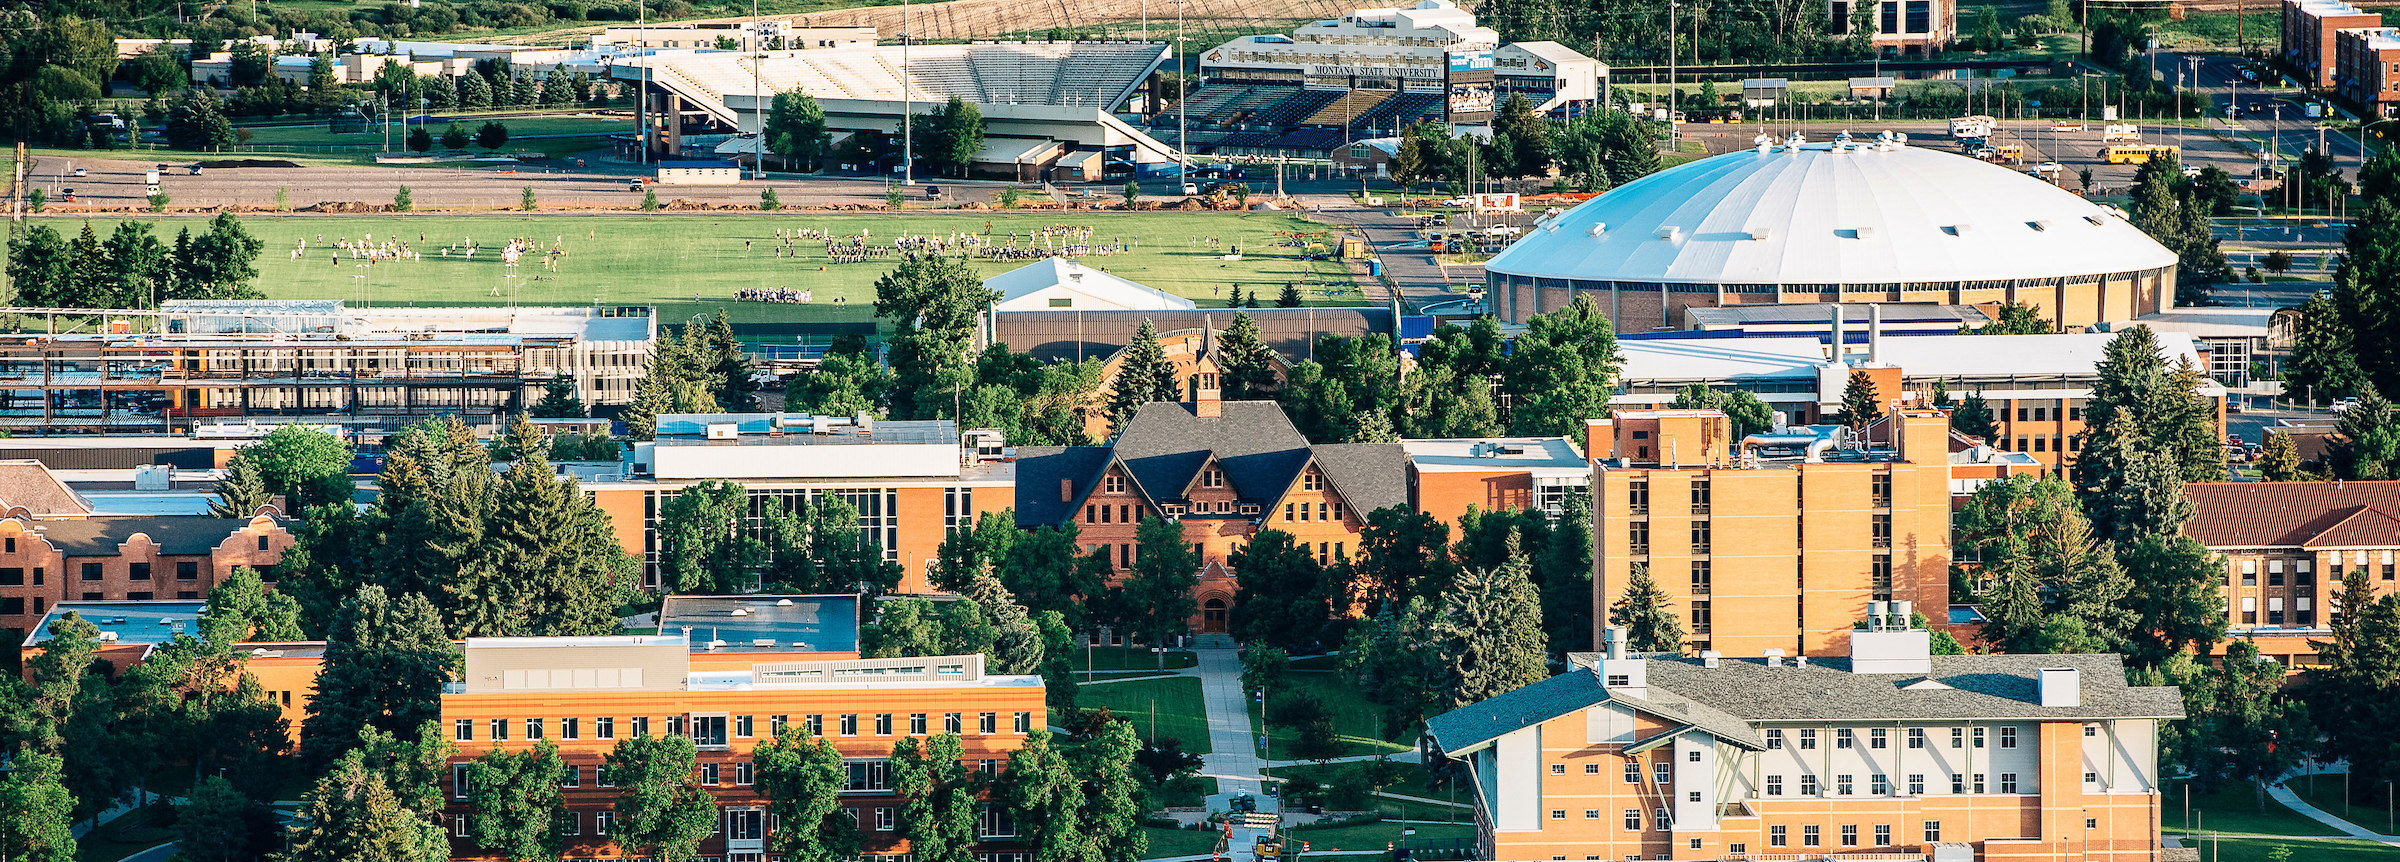 Montana State University History - Marketing | Montana State University